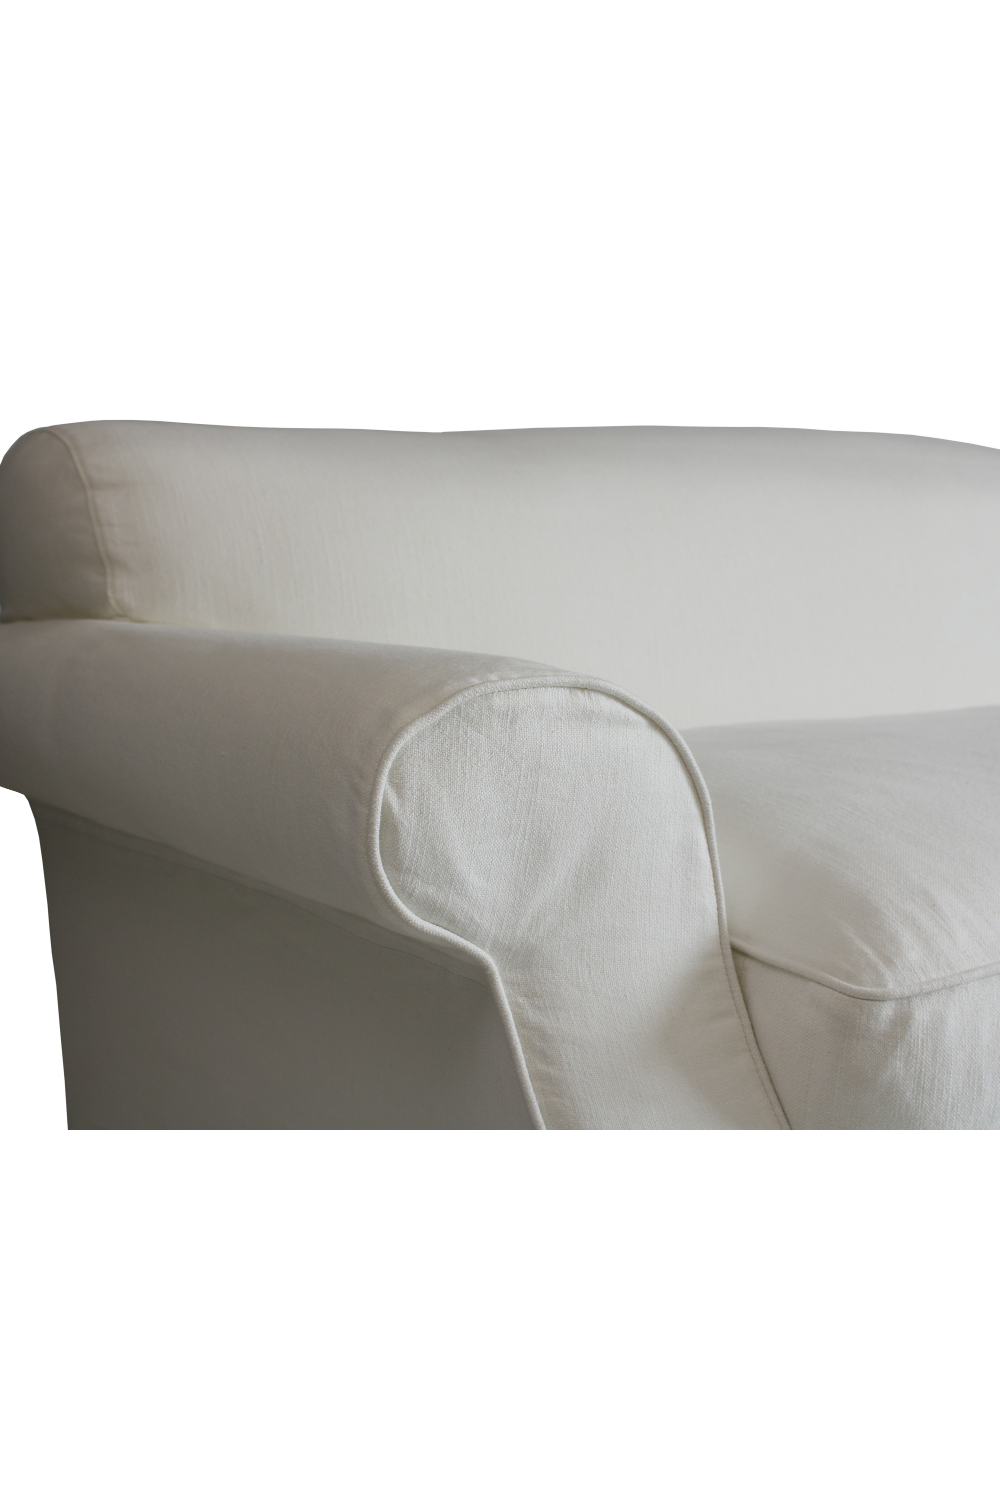 White Linen Sofa | Andrew Martin Burford | Oroa.com